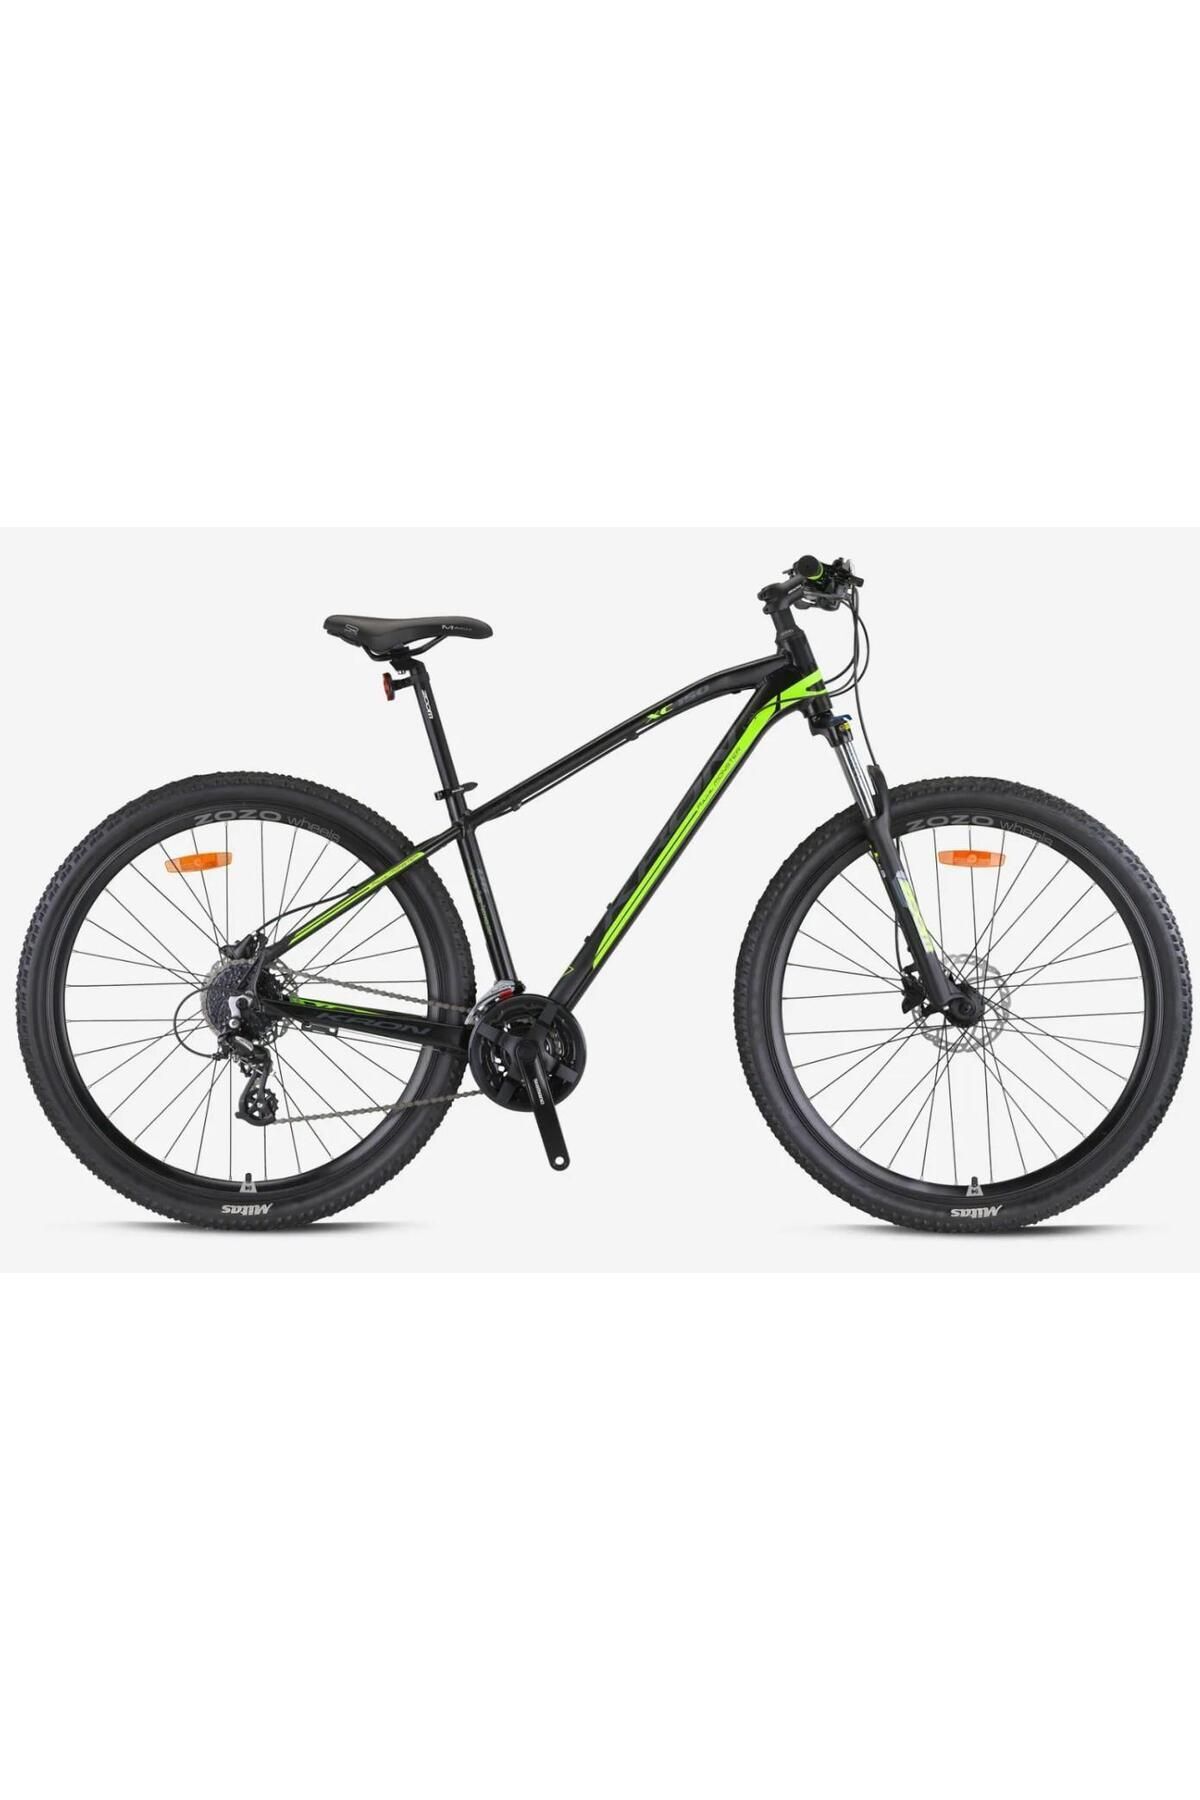 Kron Xc 150 Hd 29" Jant Bisiklet 17' Kadro 24 Vites Dağ Bisikleti Mat Siyah Neon Sarı Füme